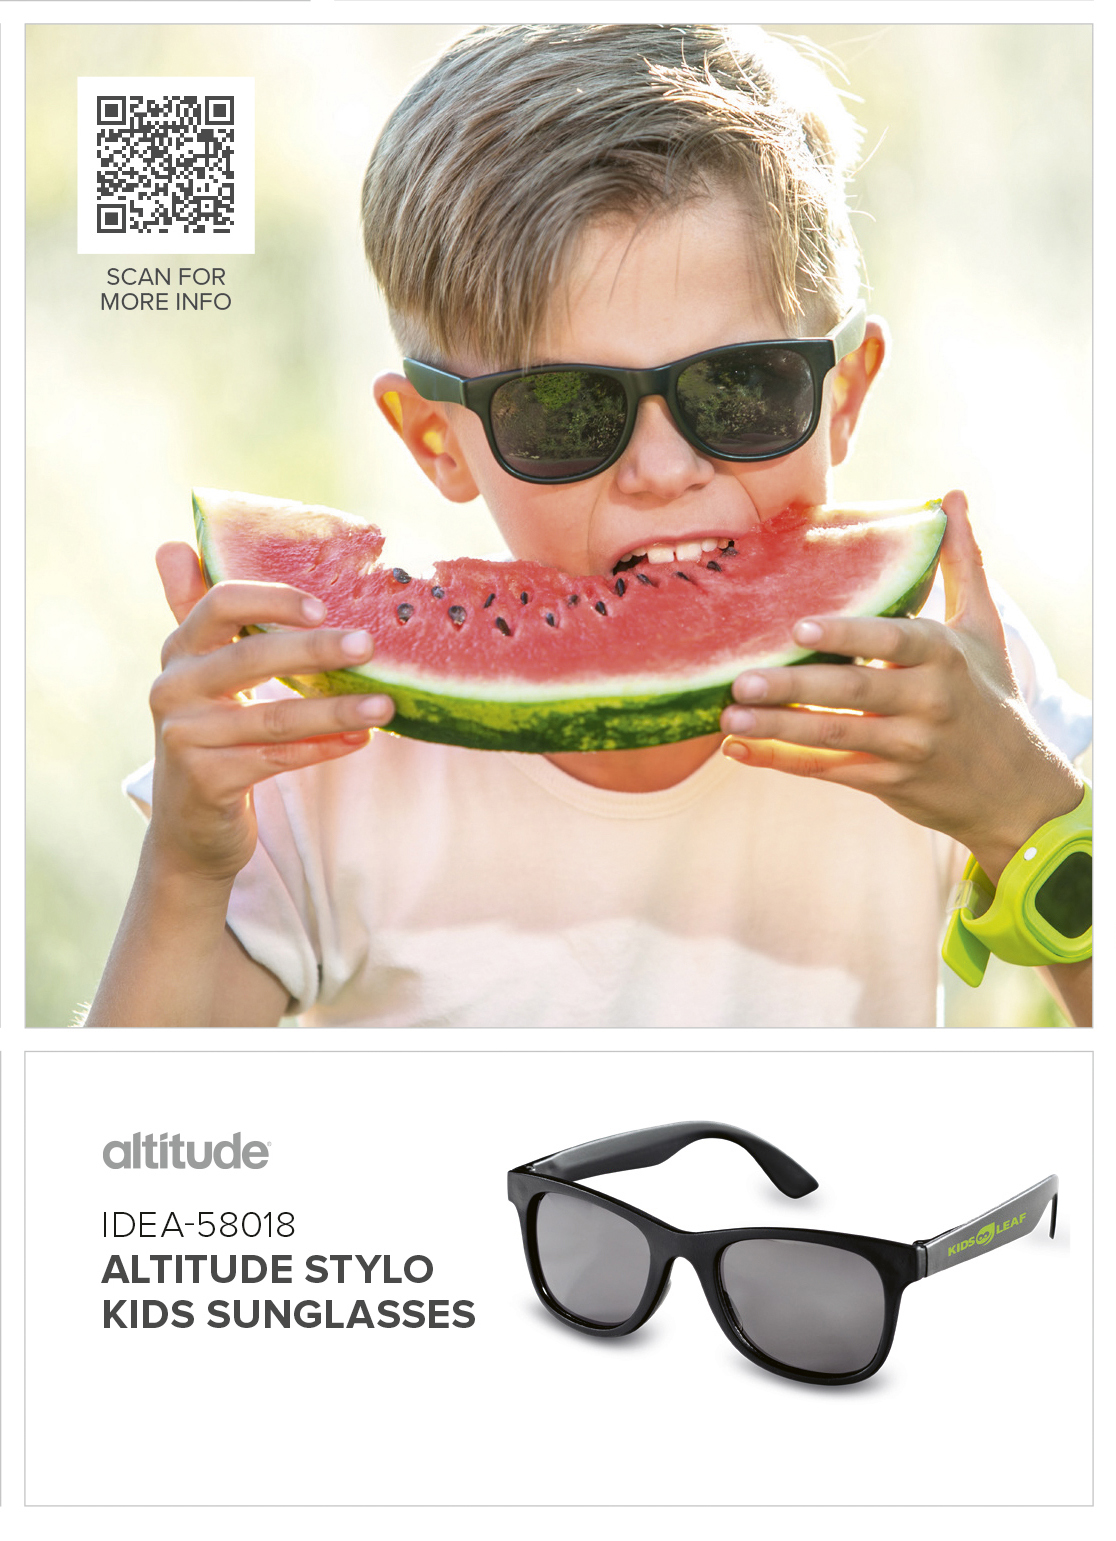 Altitude Stylo Kids Sunglasses